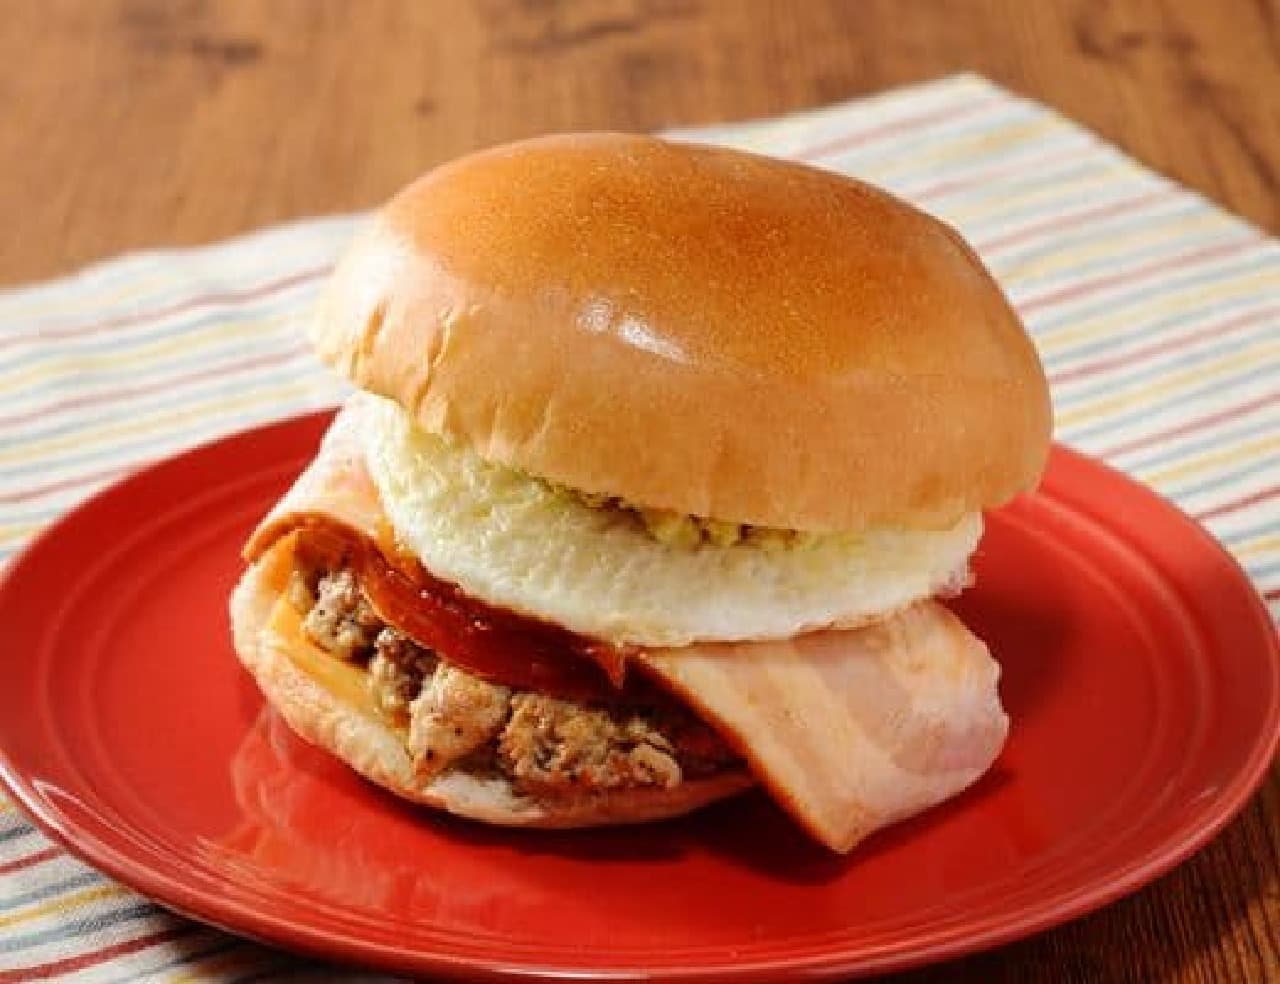 LAWSON "Bacon and Egg Cheeseburger with Kikkori Beef